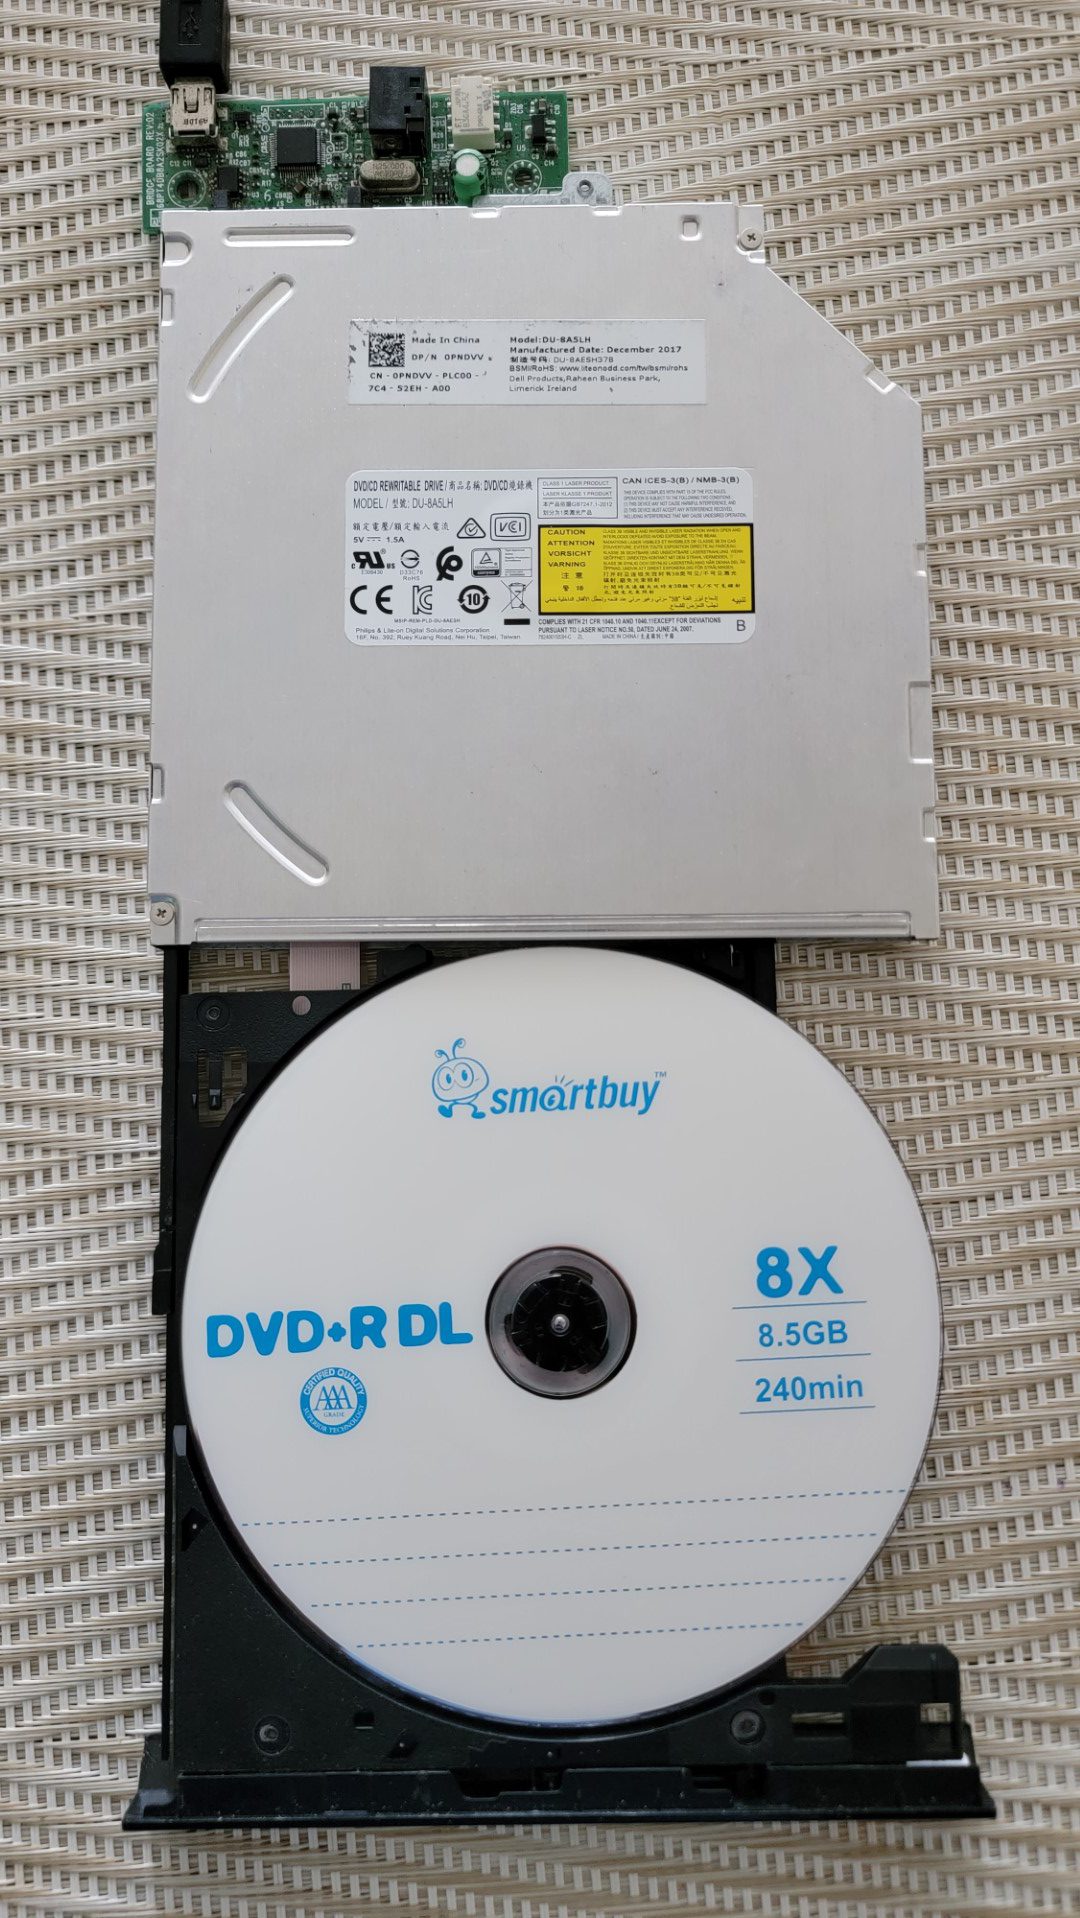 SmartBuy DVD+R DL (Media Code: RITEK-S04-66 in the LiteOn (PLDS) DU-8A5LH Optical Drive